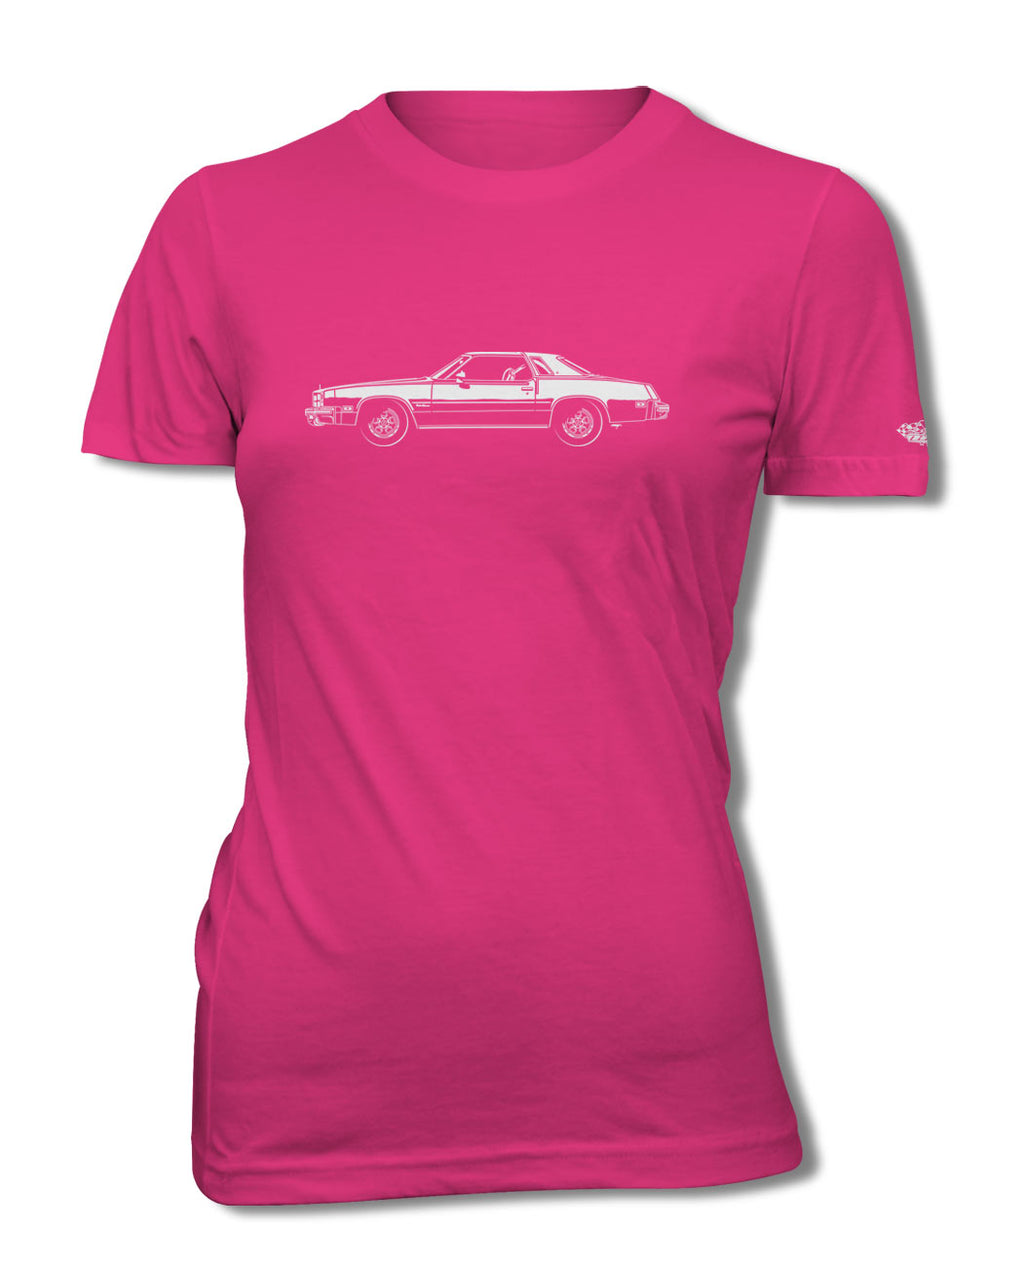 1977 Oldsmobile Cutlass 4-4-2 Coupe T-Shirt - Women - Side View